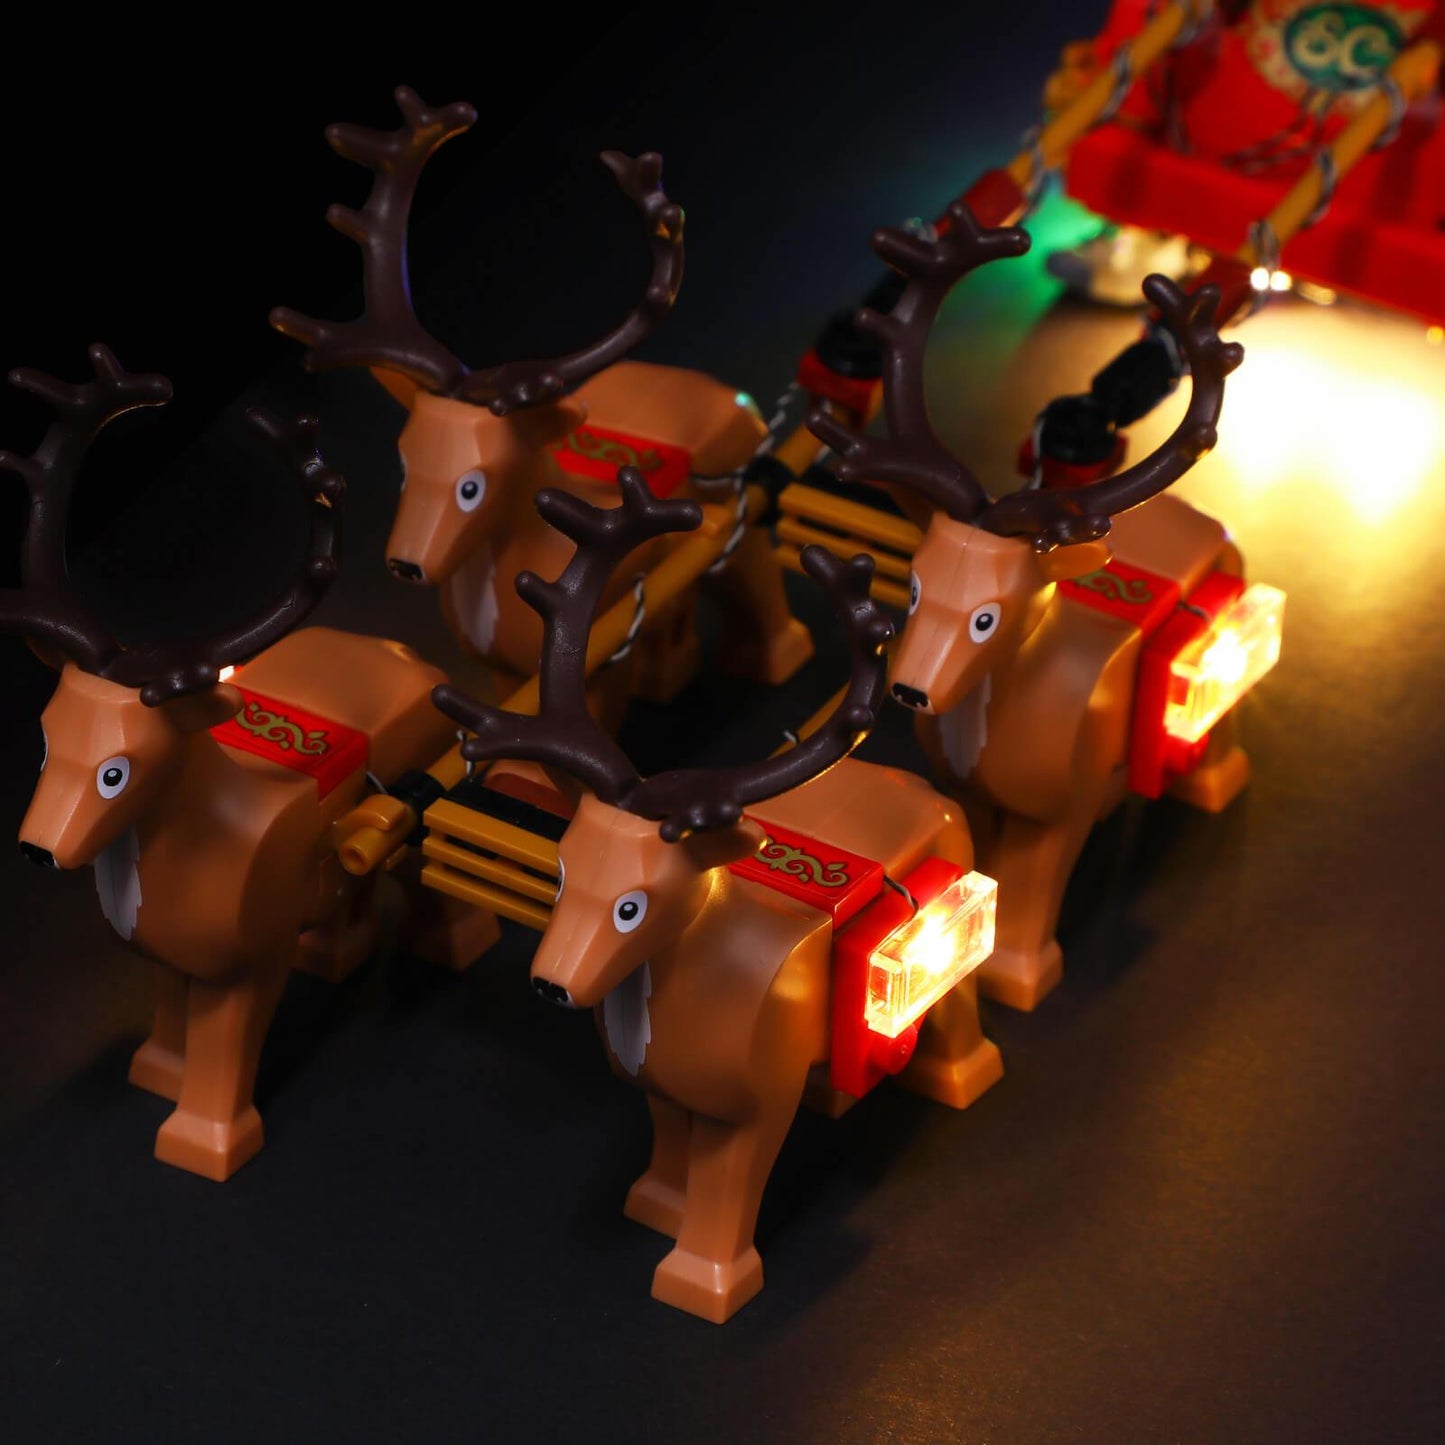  4 reindeer figures with warm light saddles